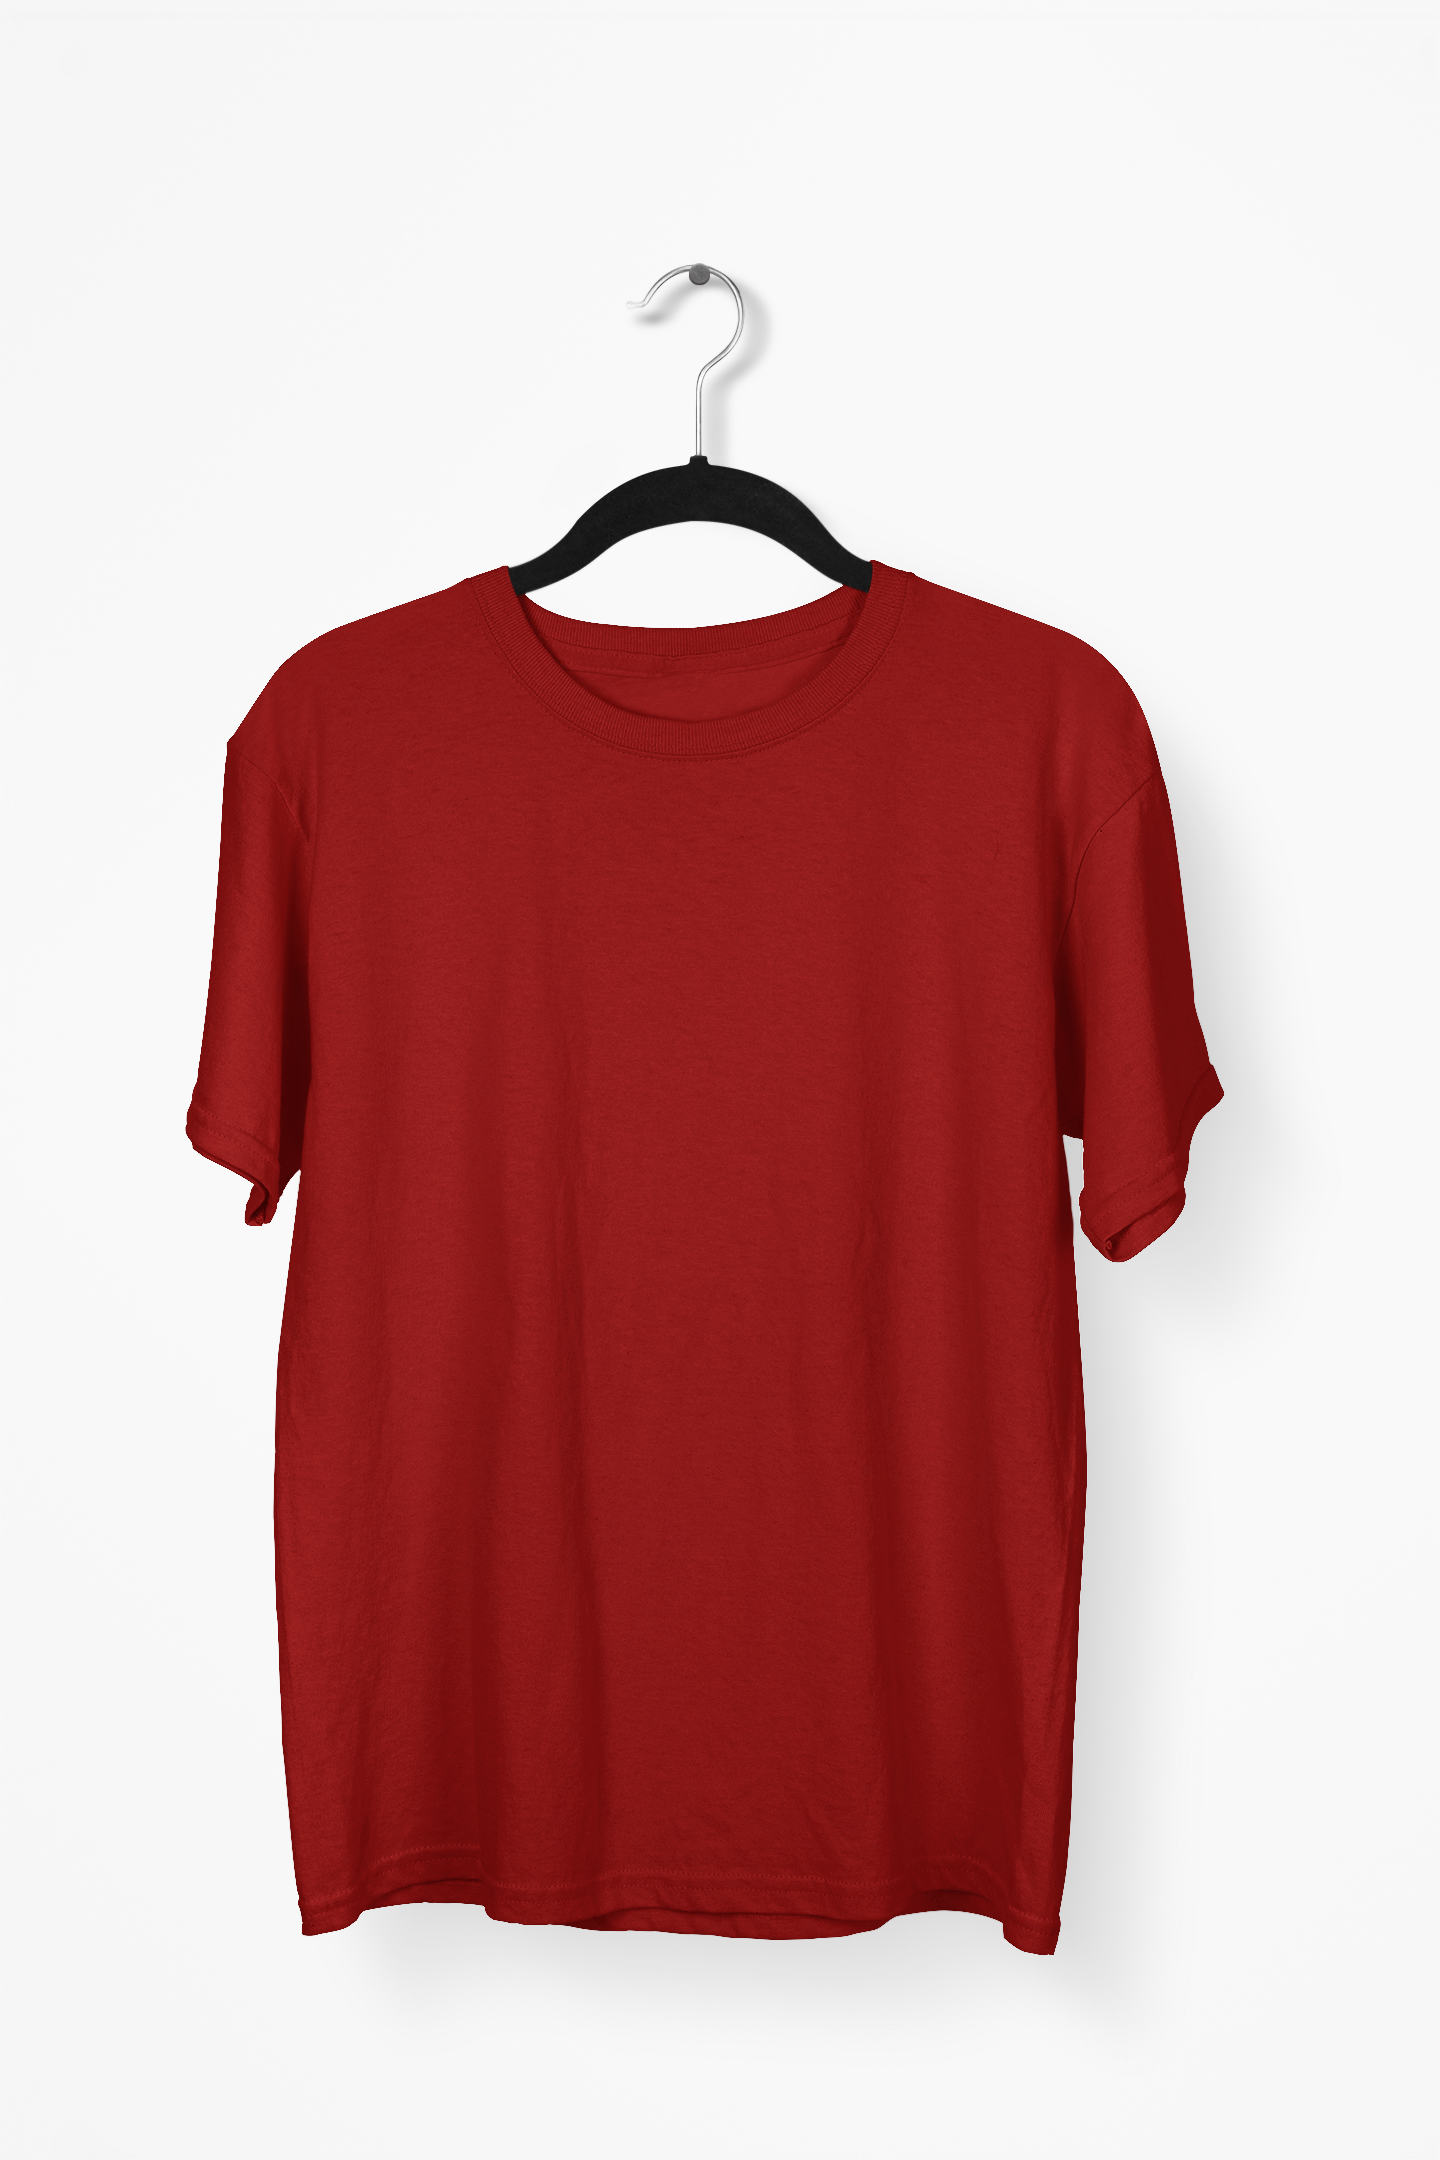 Half Sleeves Crew Neck T-shirt -Cherry Red